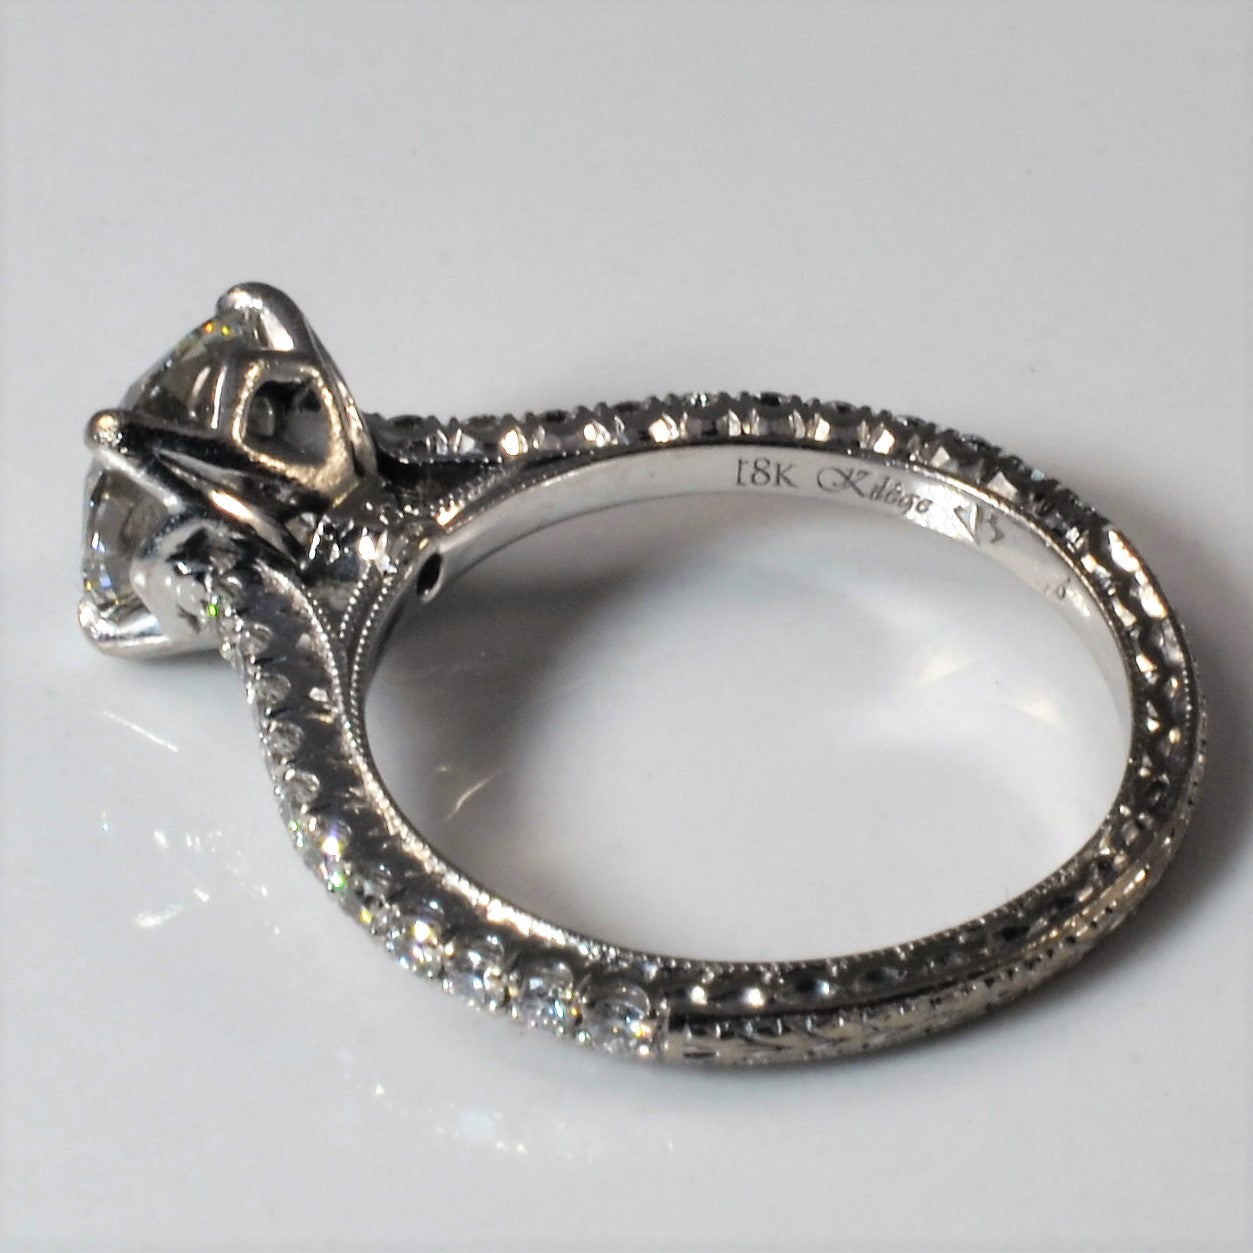 Pave Band Diamond Engagement Ring | 1.42ctw | SZ 4 |